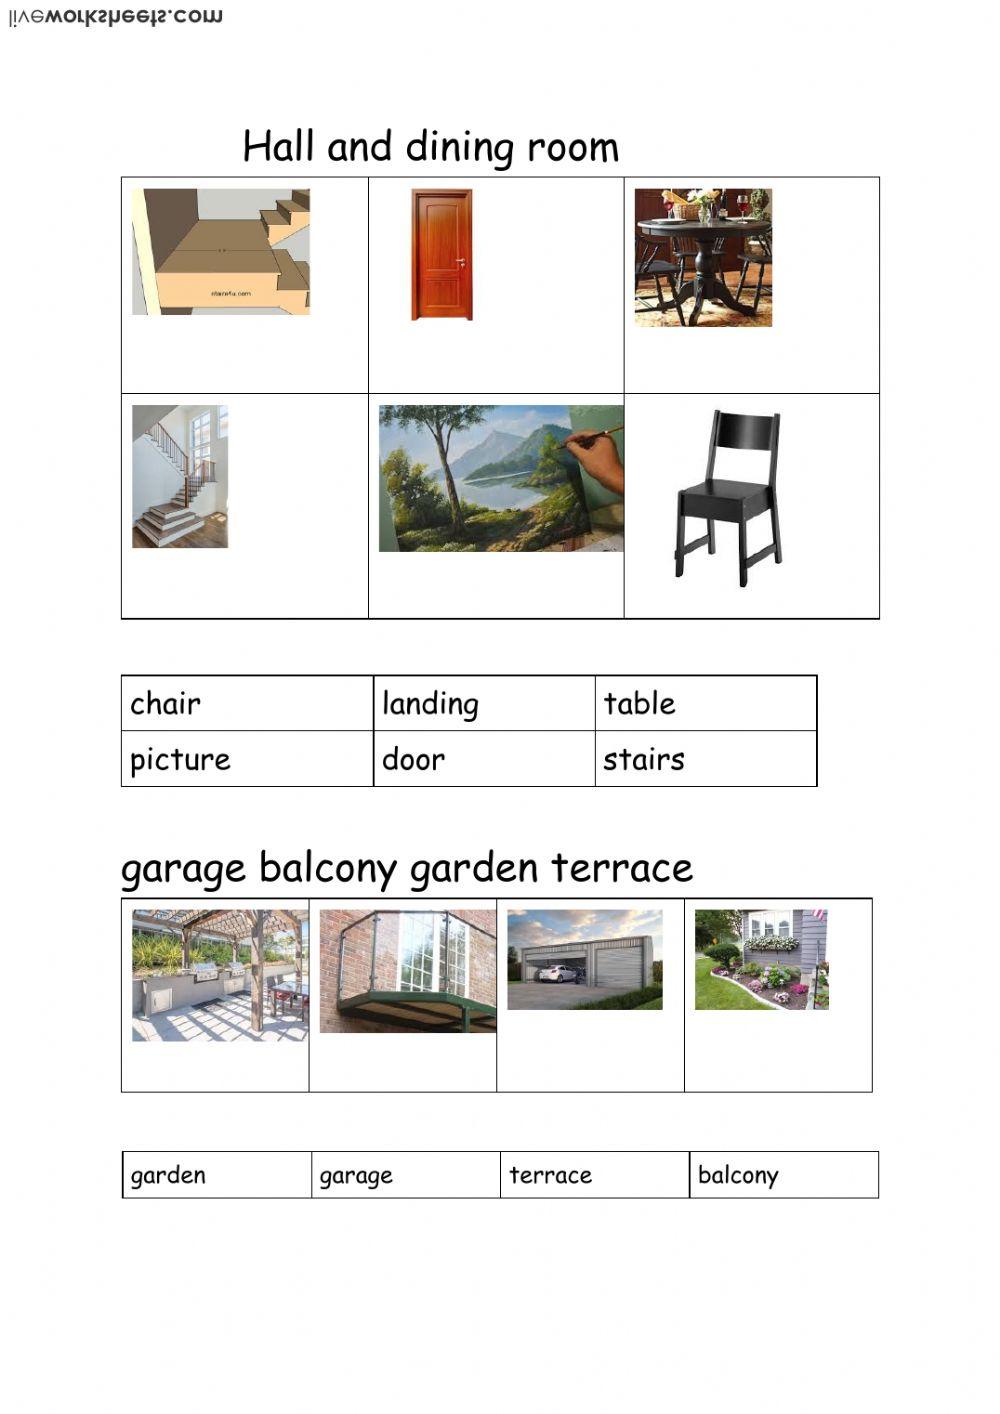 hall,dining room, stairs, terrace, balcony garden